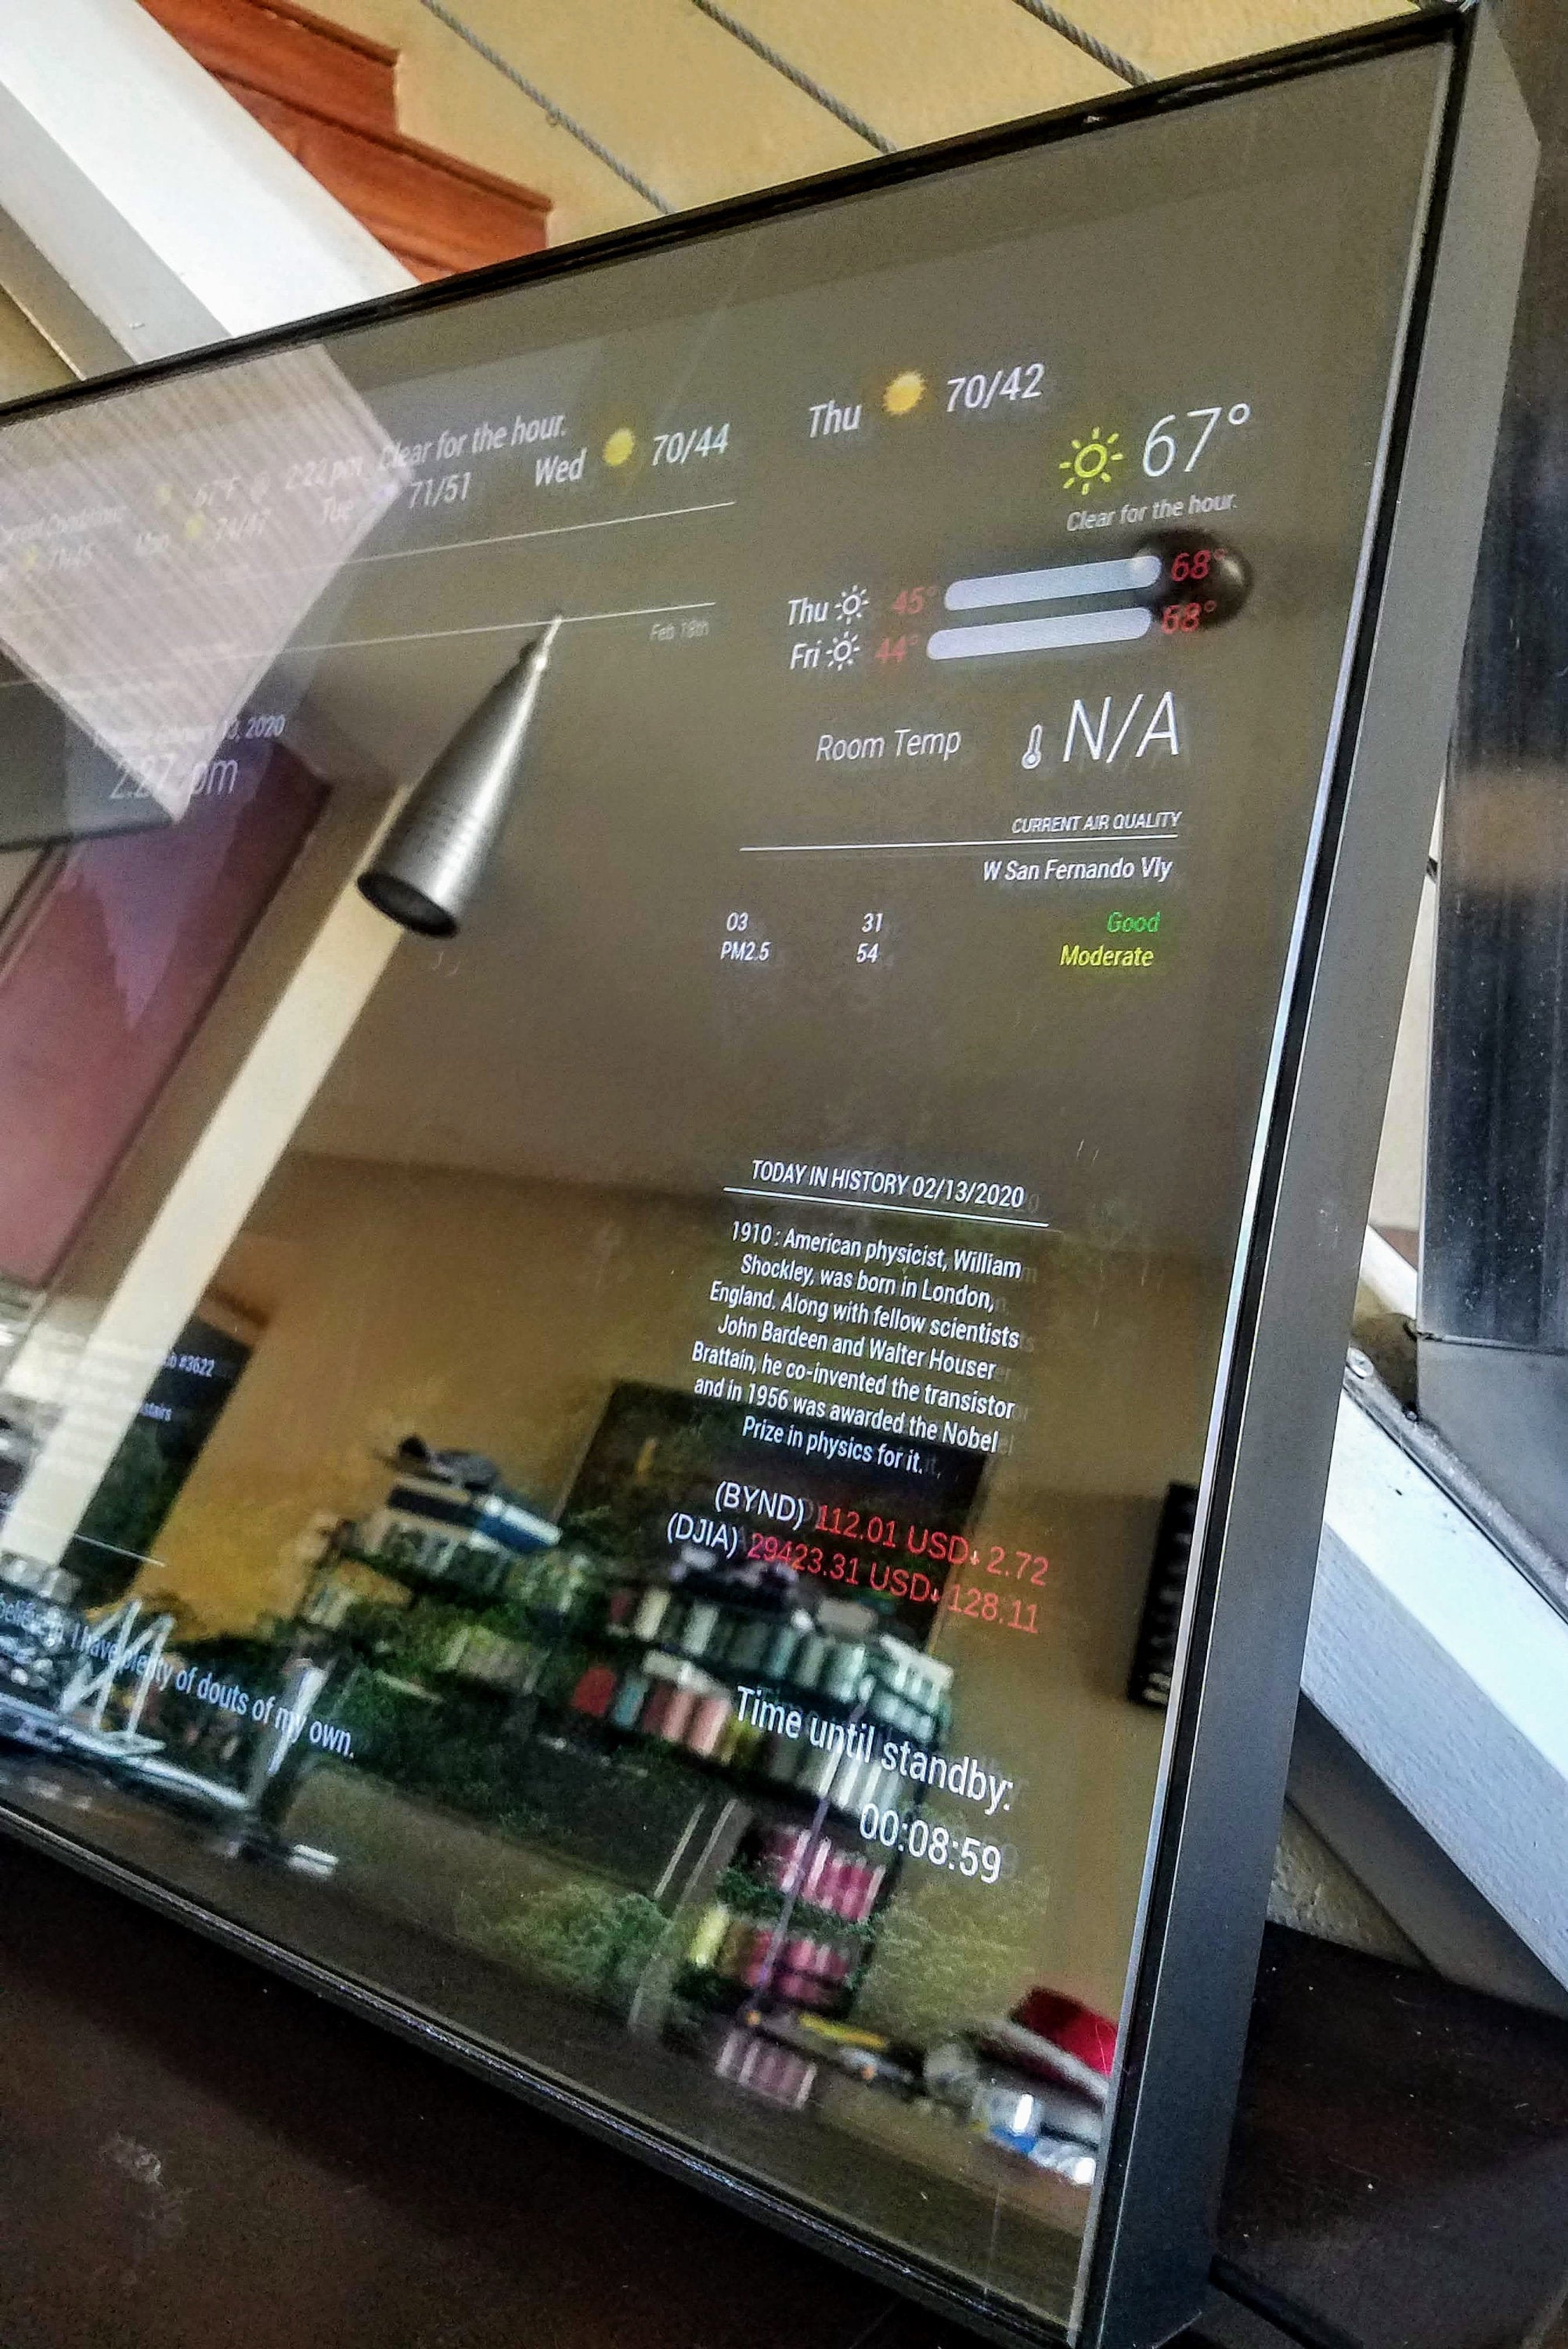 Google Assistant Smart Mirror - 32"HD Display in 19"X30"X2" Satin Black Aluminum Frame